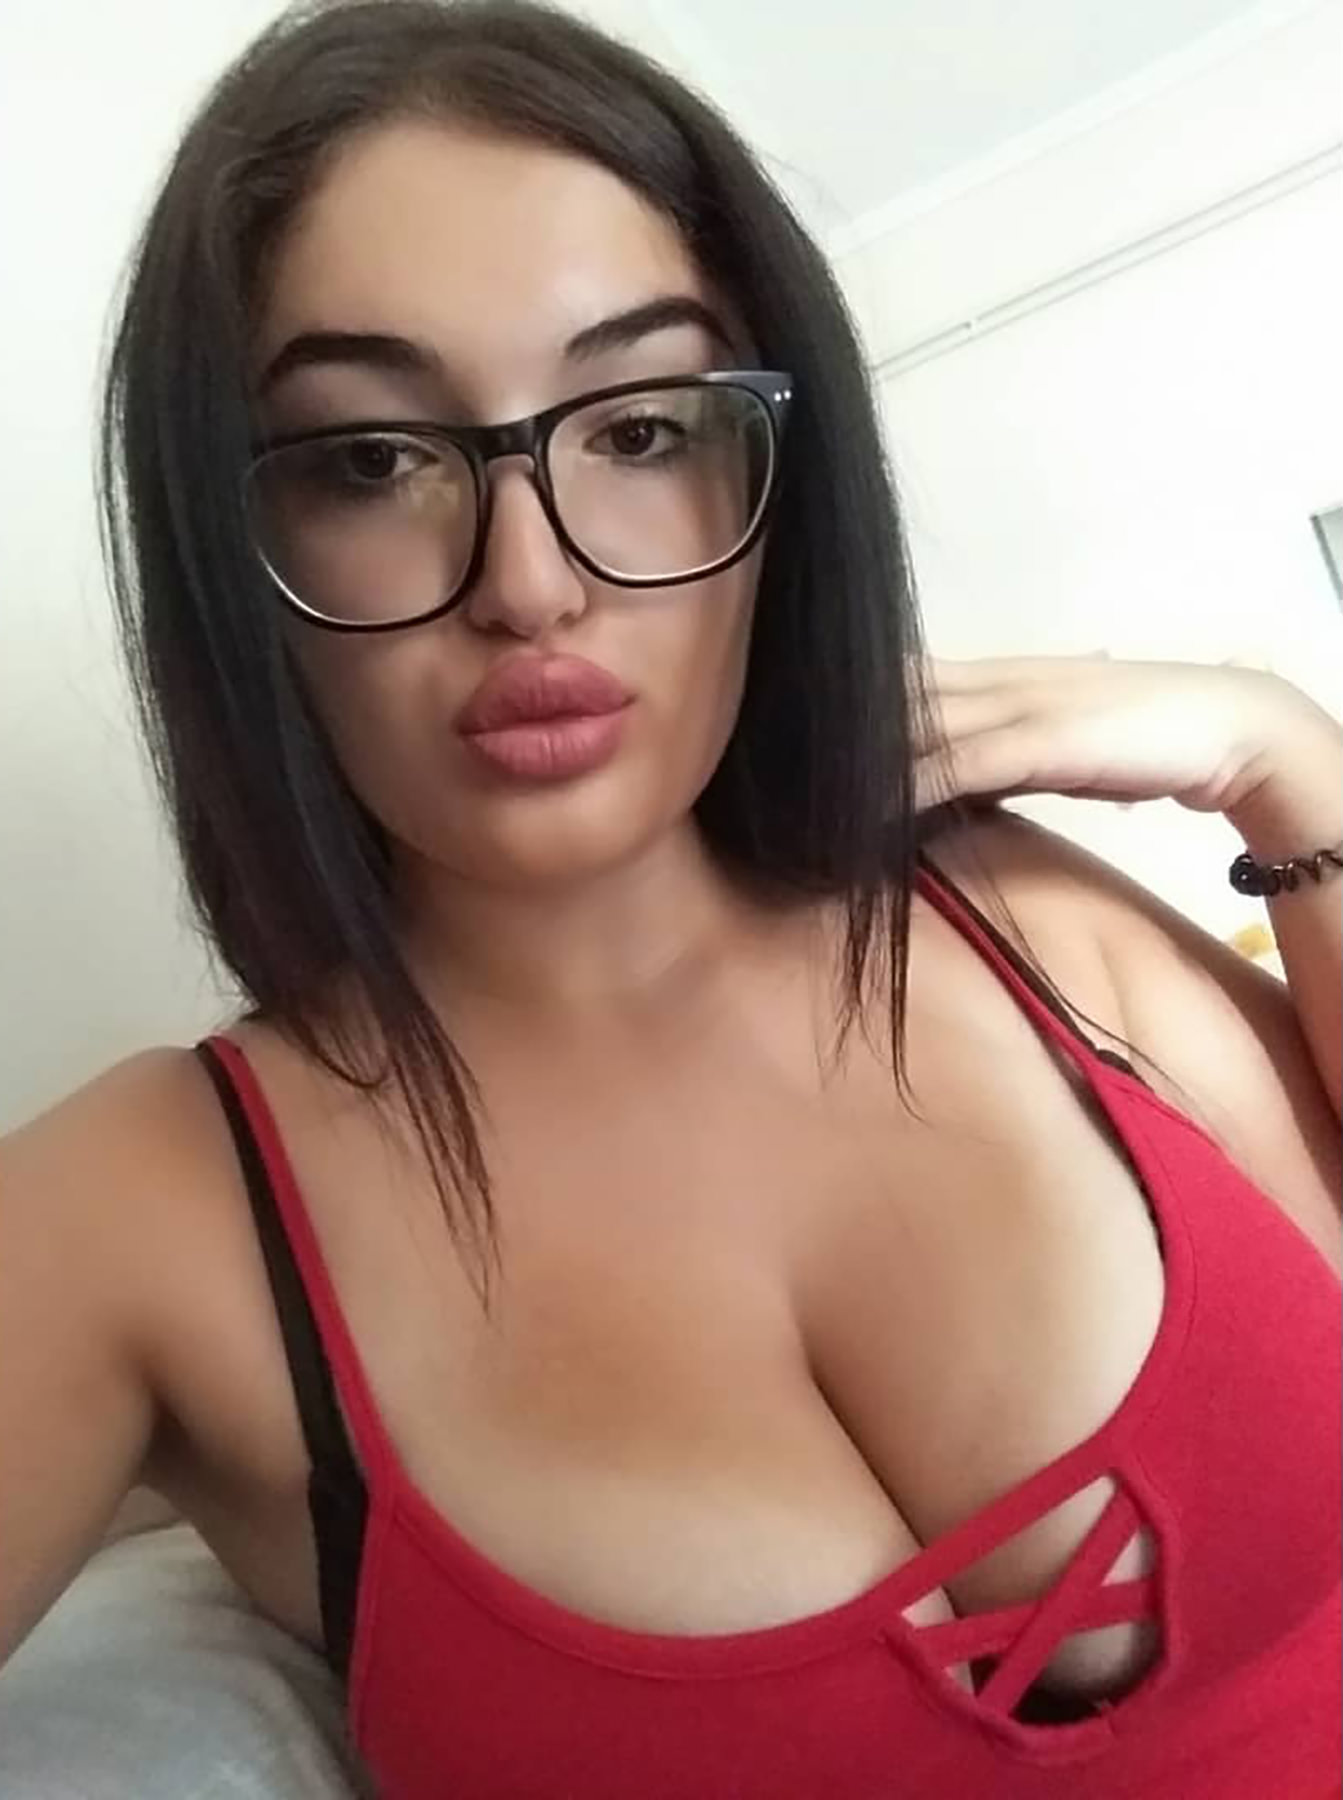 Big lips and big tits